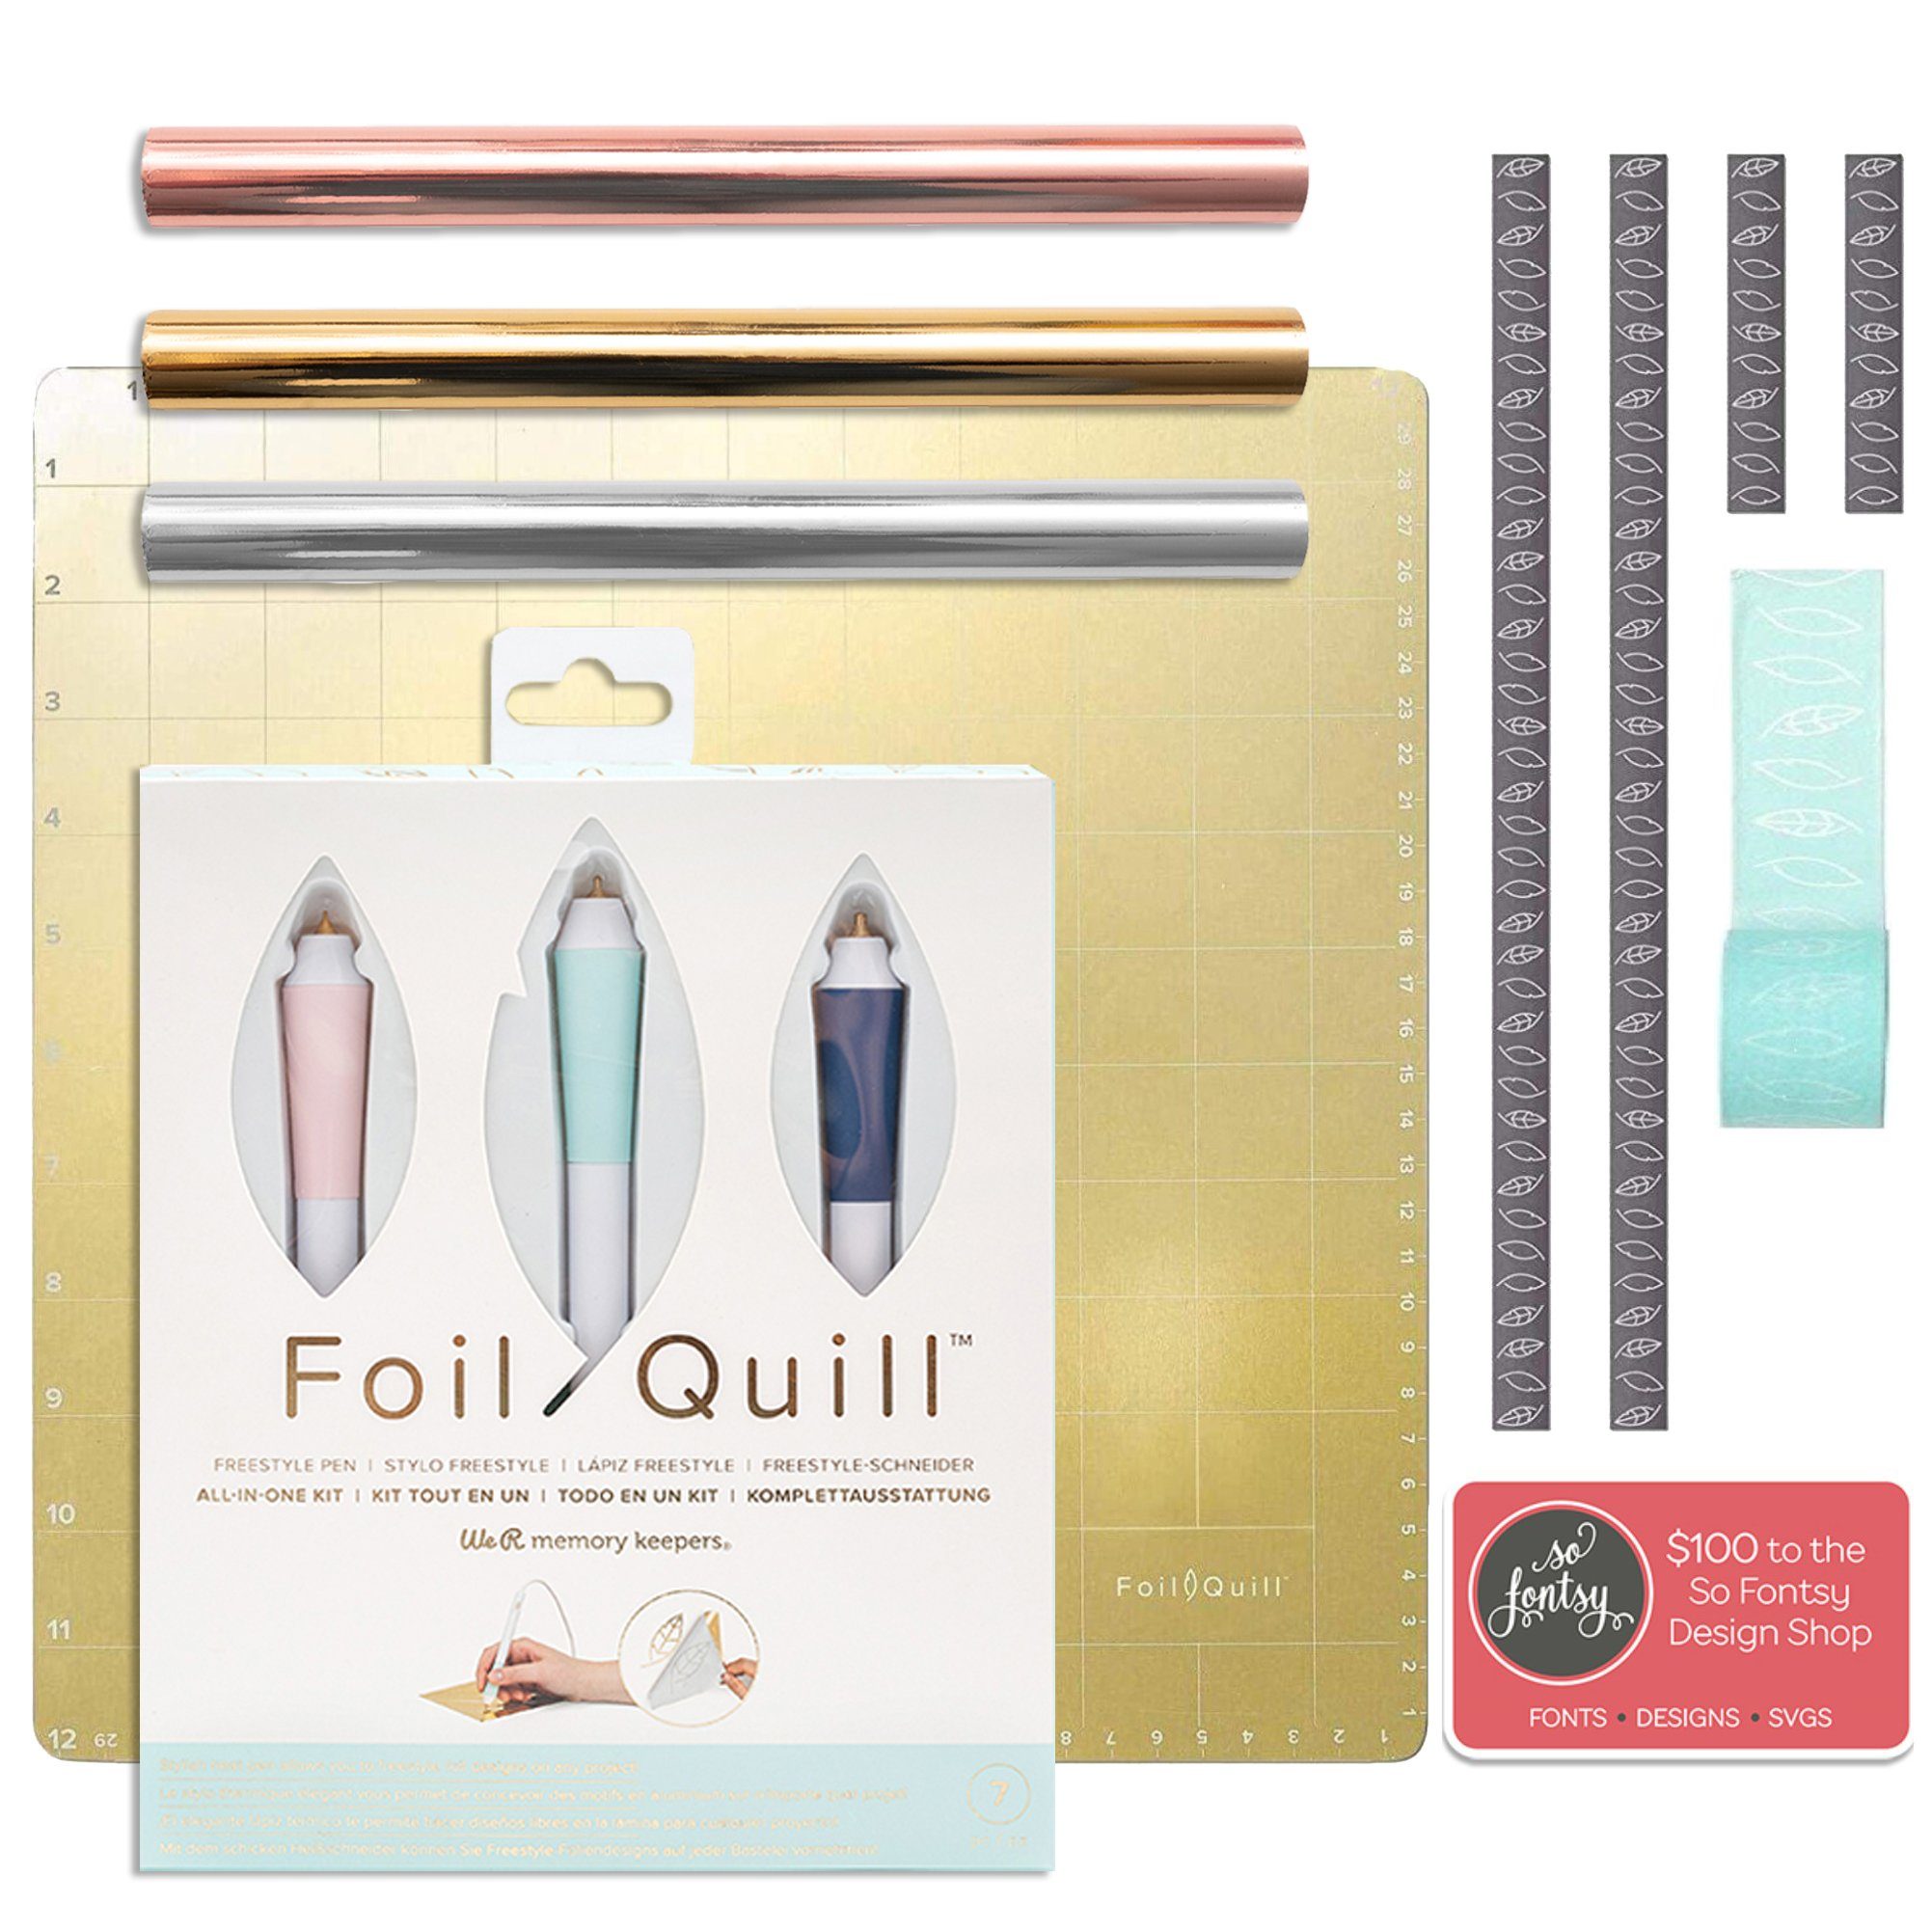 Foil Quill Freestyle Magnetic Mat Bundle 3 Hand Quills Foils Tape Design  Card